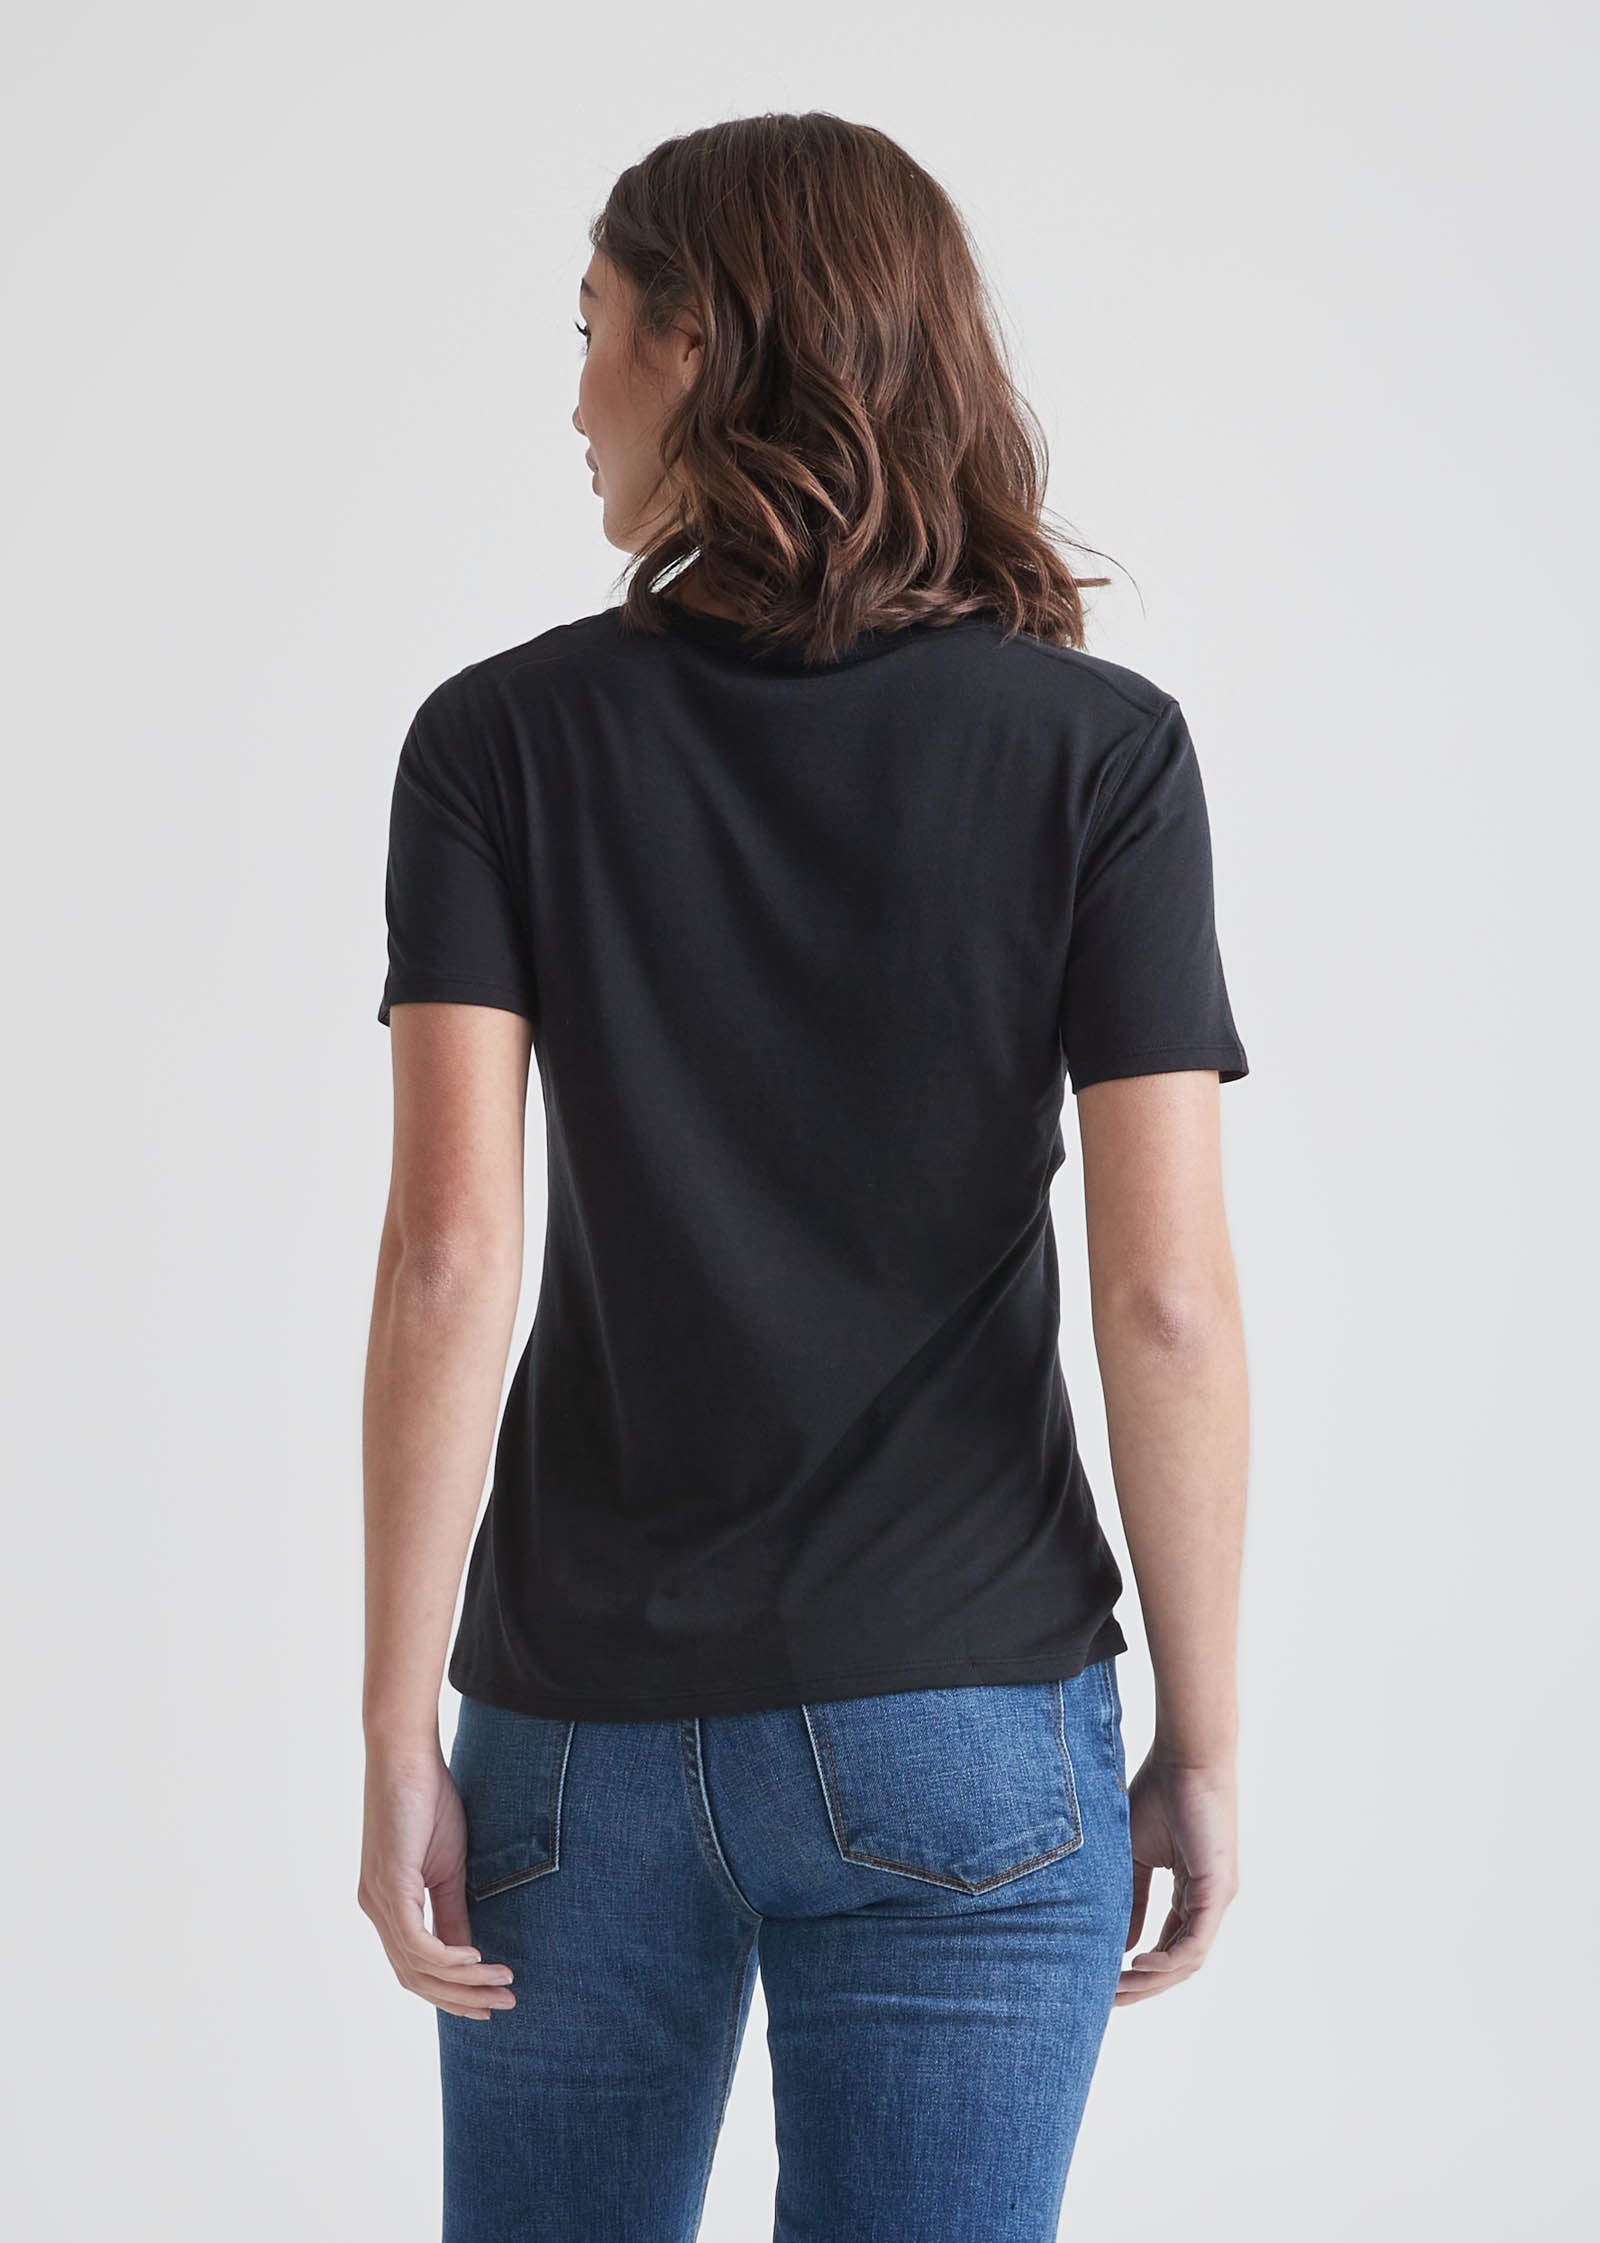 Souluxe Black V-Neck Textured Sports T-Shirt